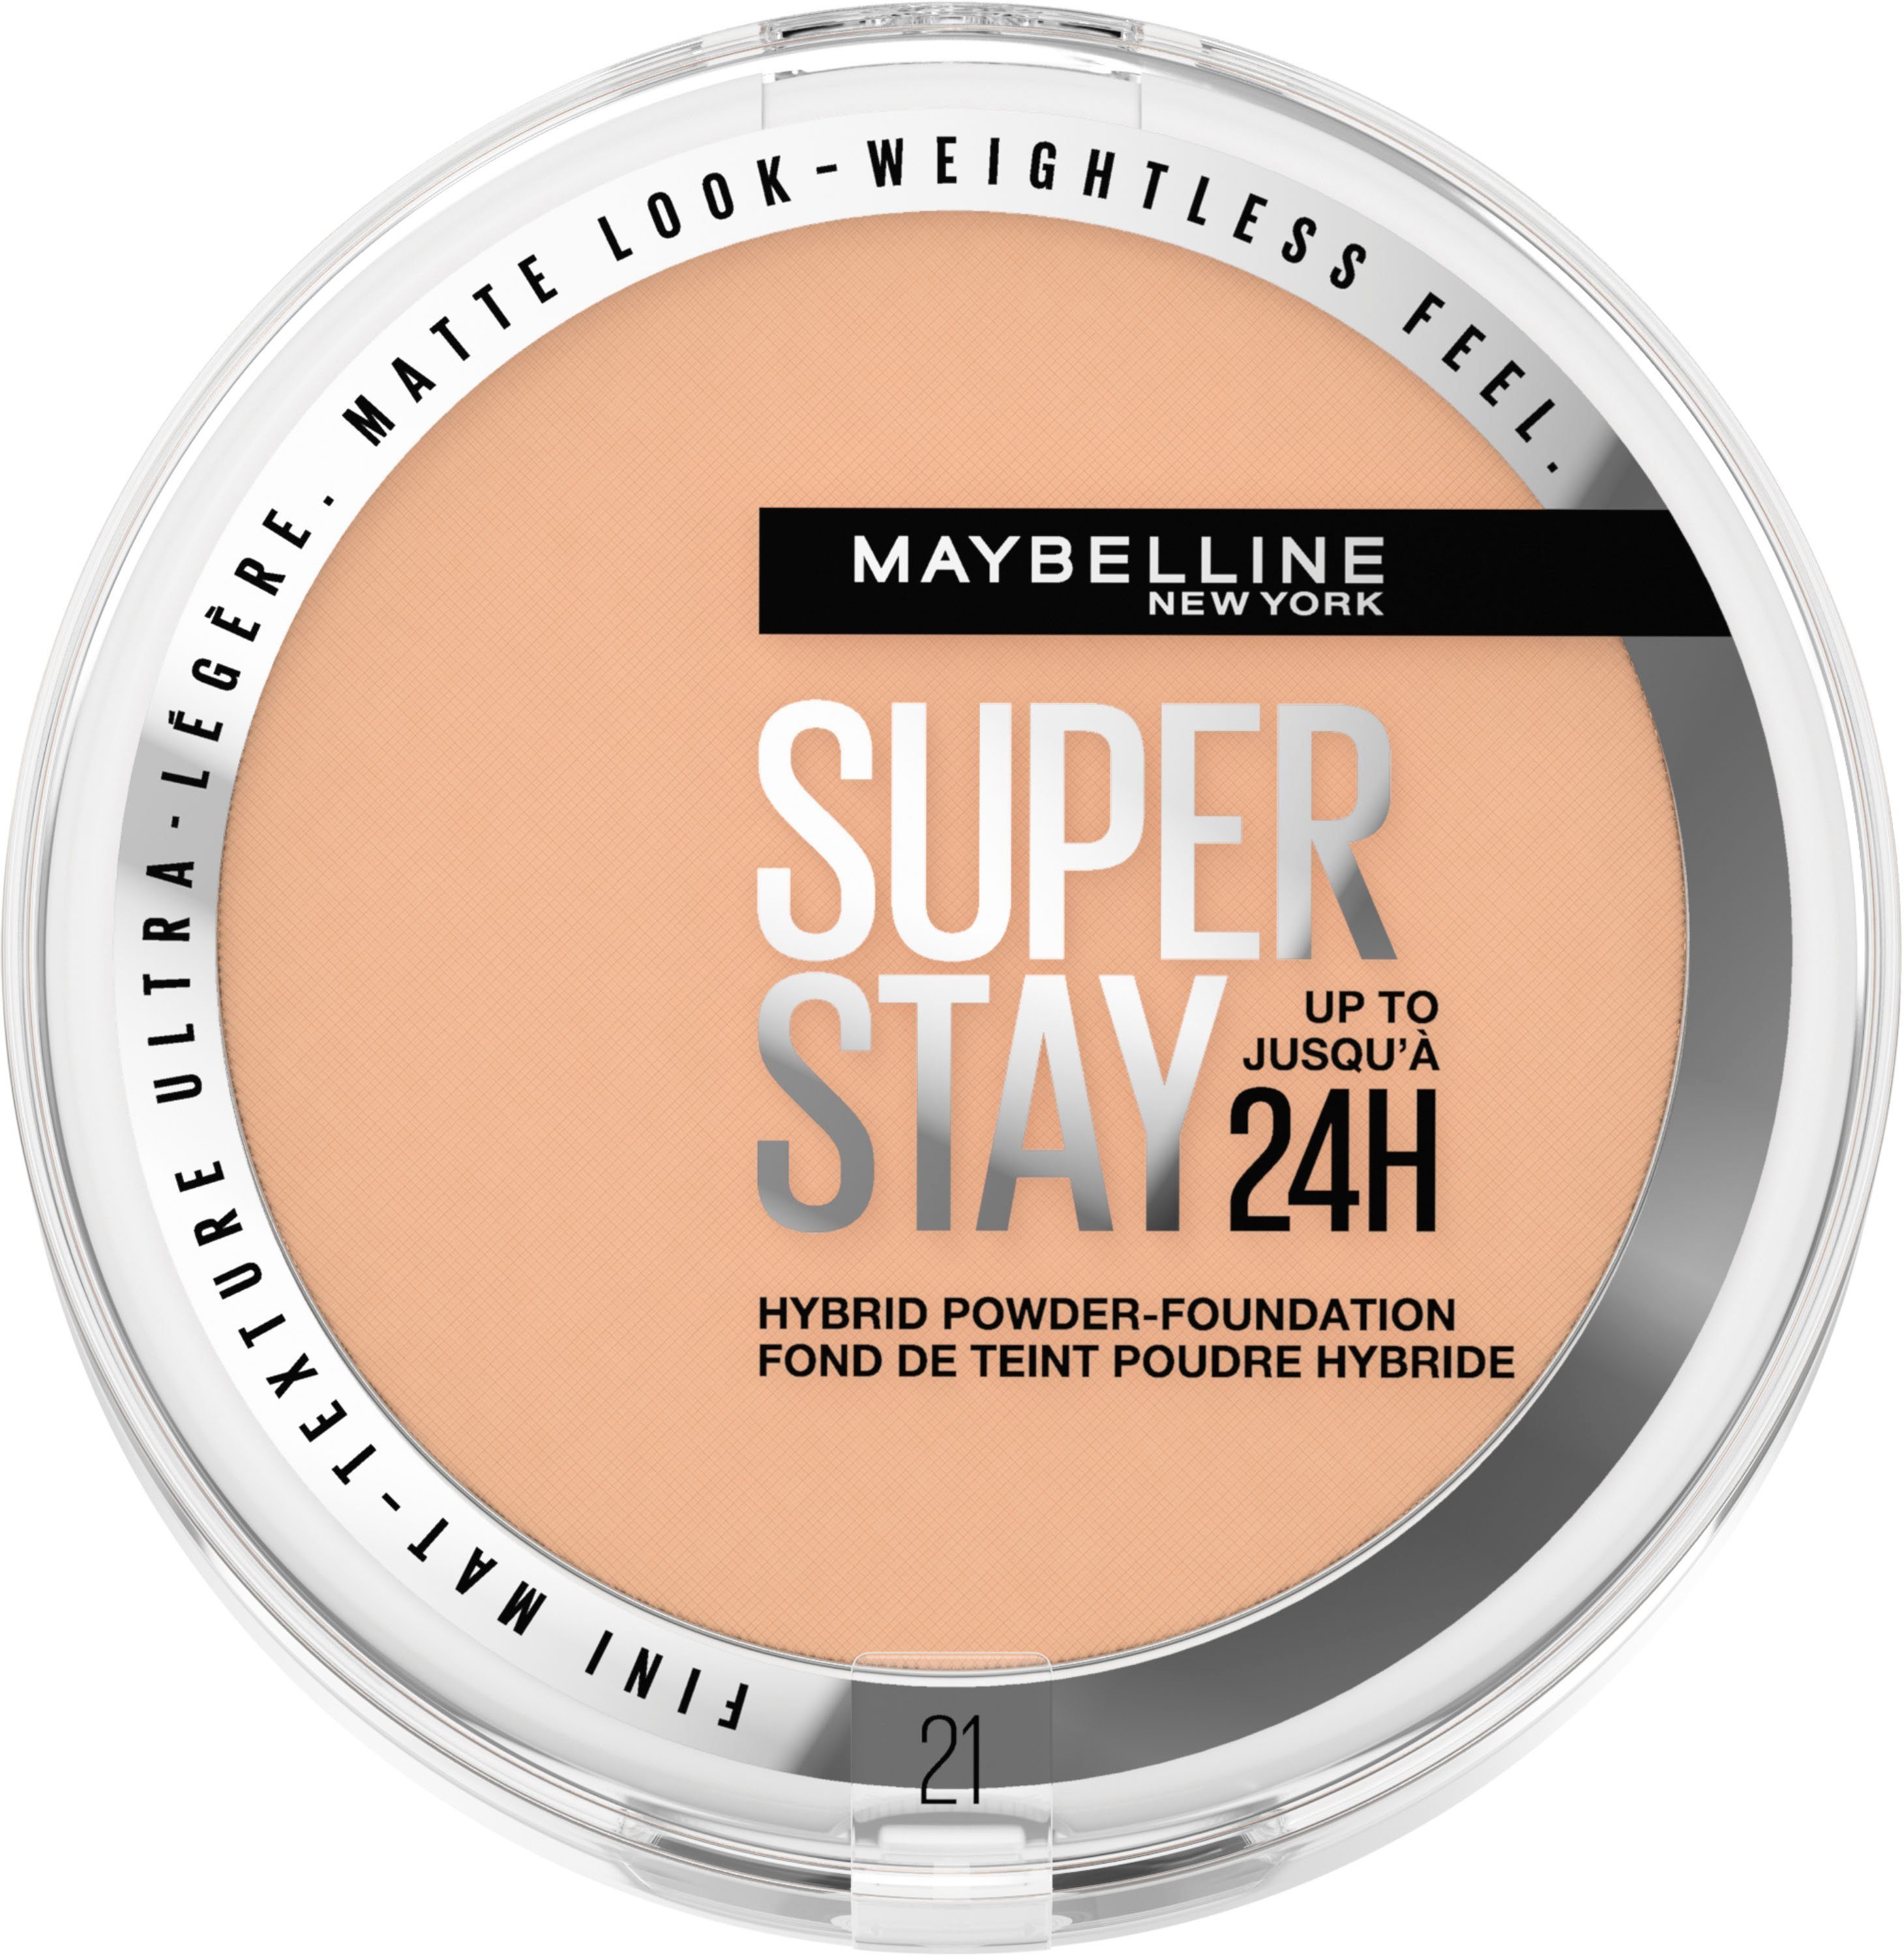 MAYBELLINE NEW YORK Foundation Maybelline New York Super Stay Hybrides Puder Make-Up | Foundation